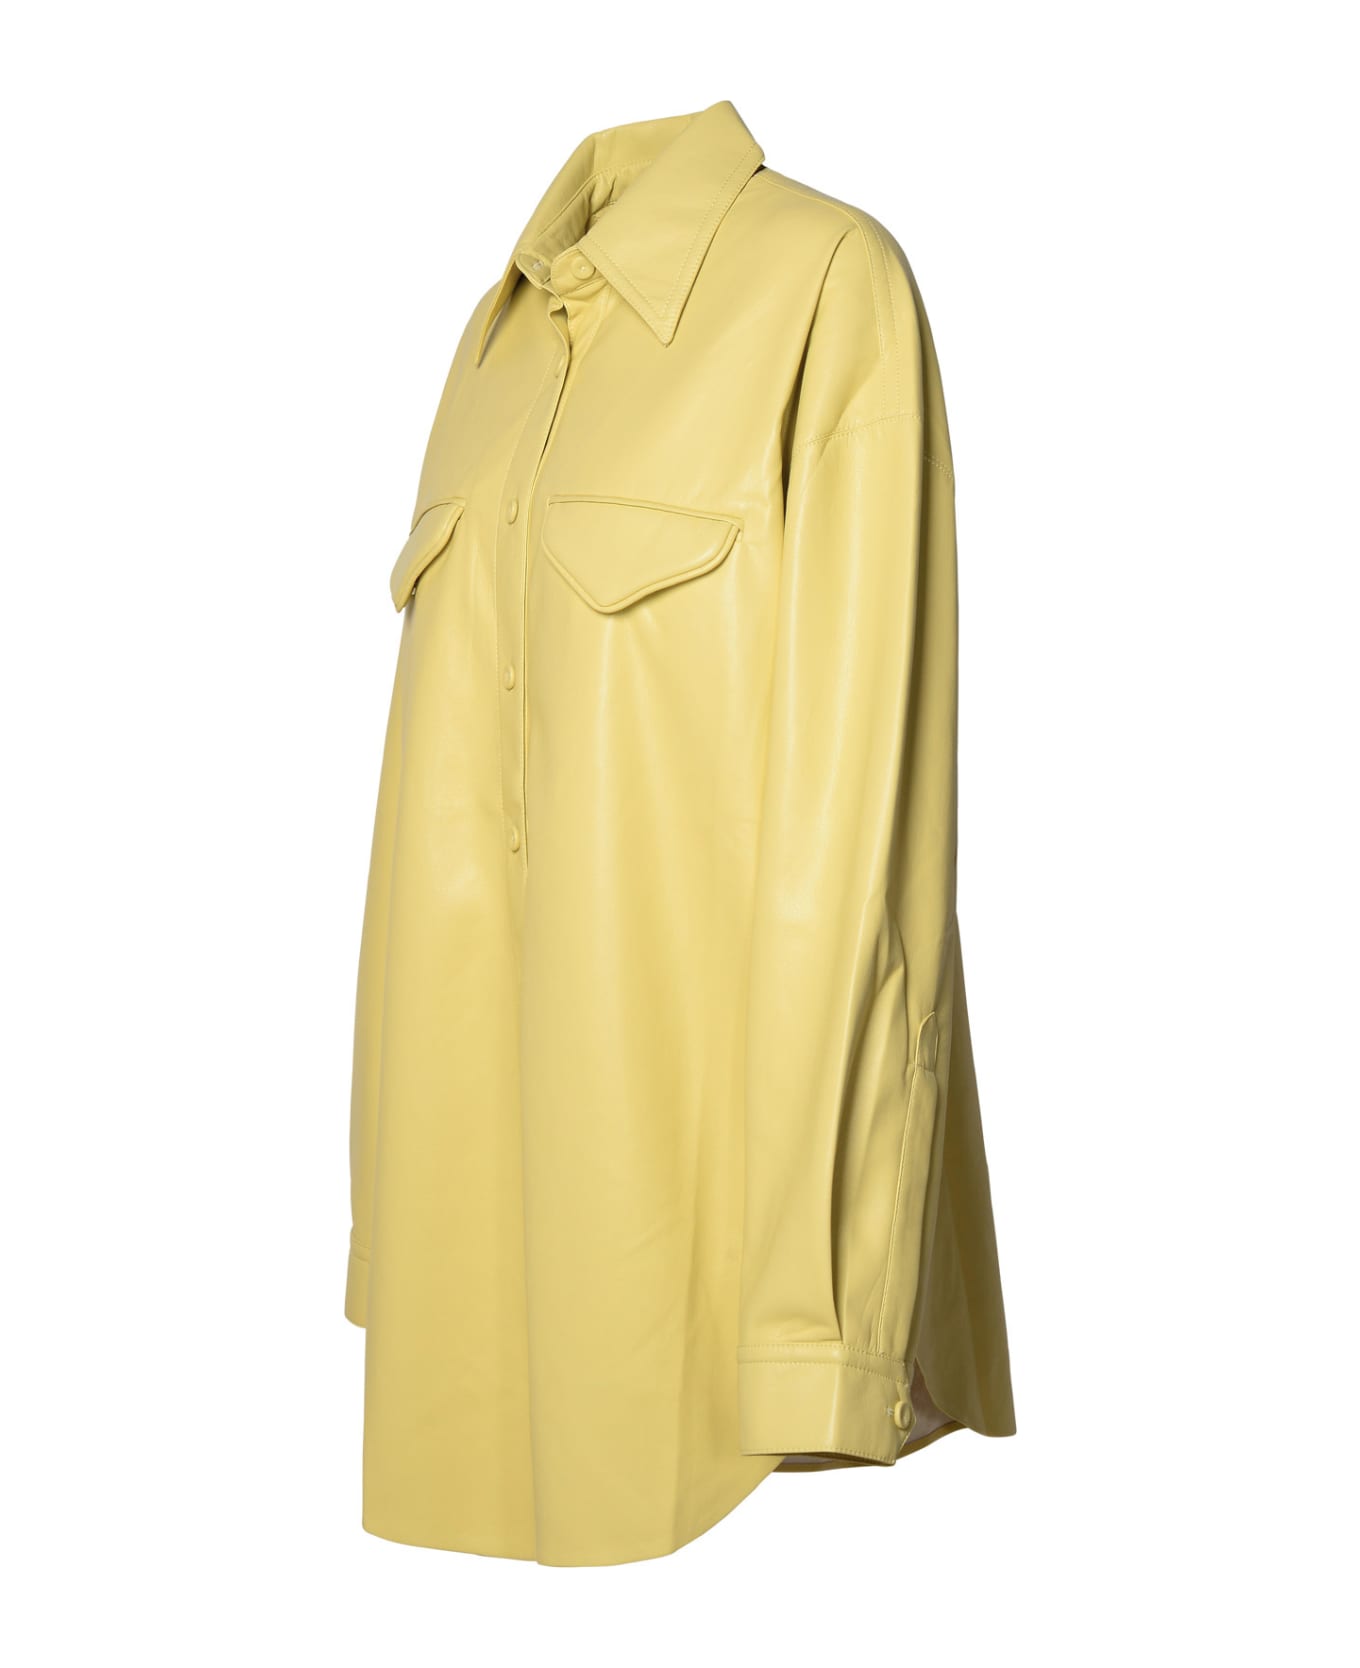 Nanushka 'kaysa' Lime Polyurethane Shirt - Yellow シャツ